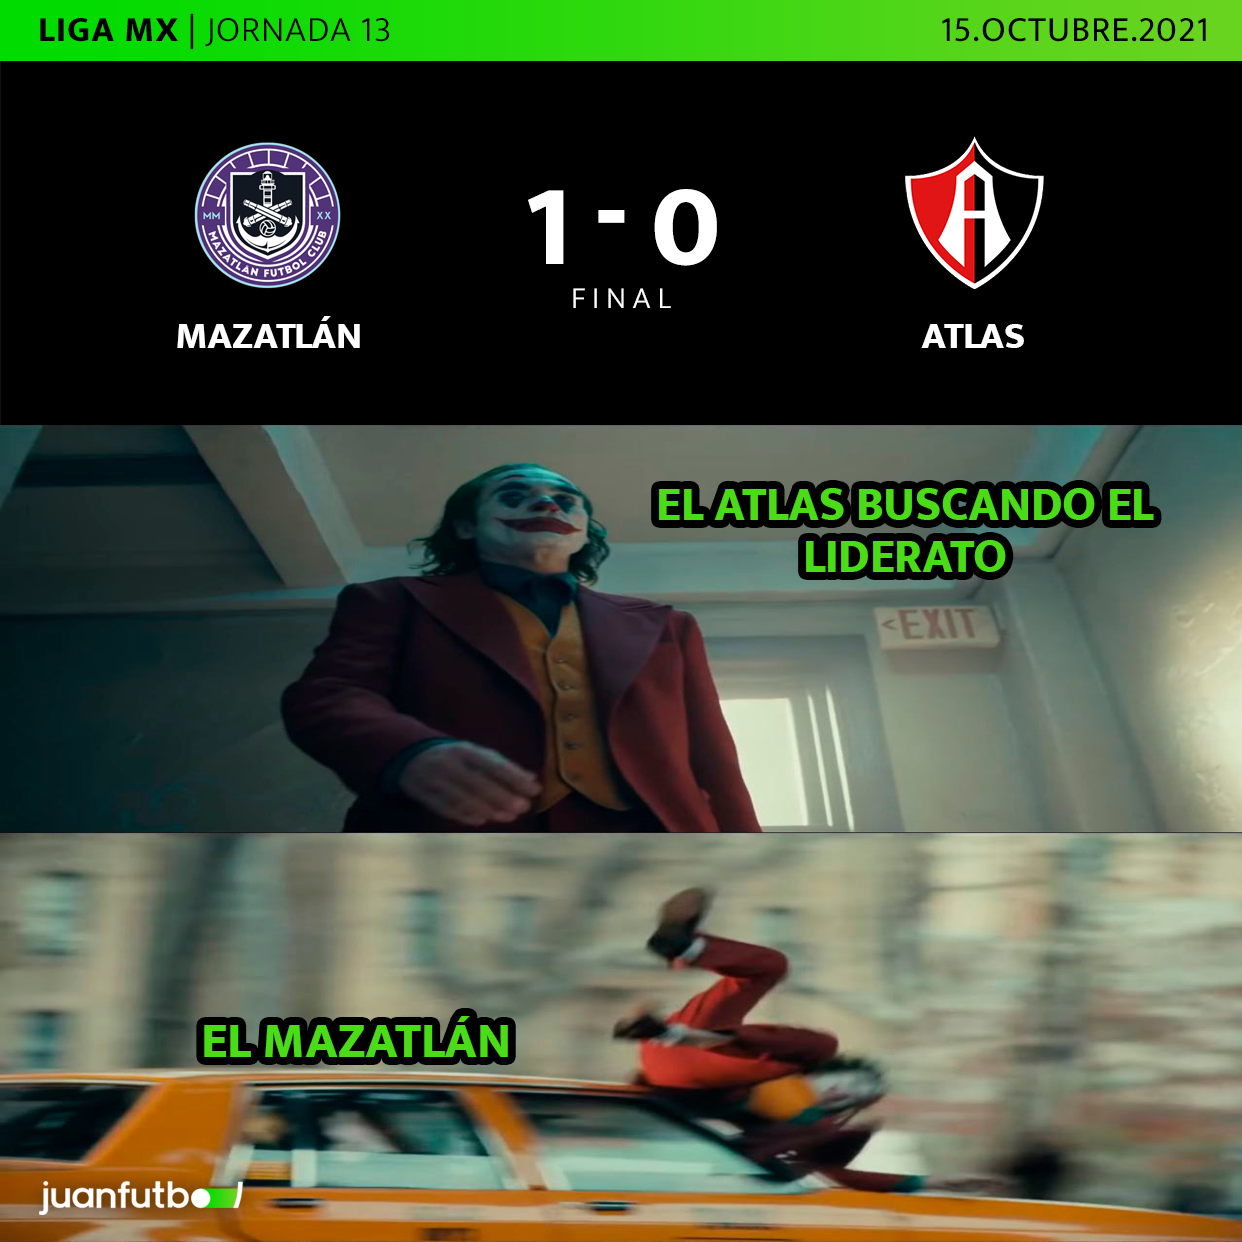 El golazo de Gignac, el tiro libre de Talavera y los memes de la jornada 13 de la Liga MX